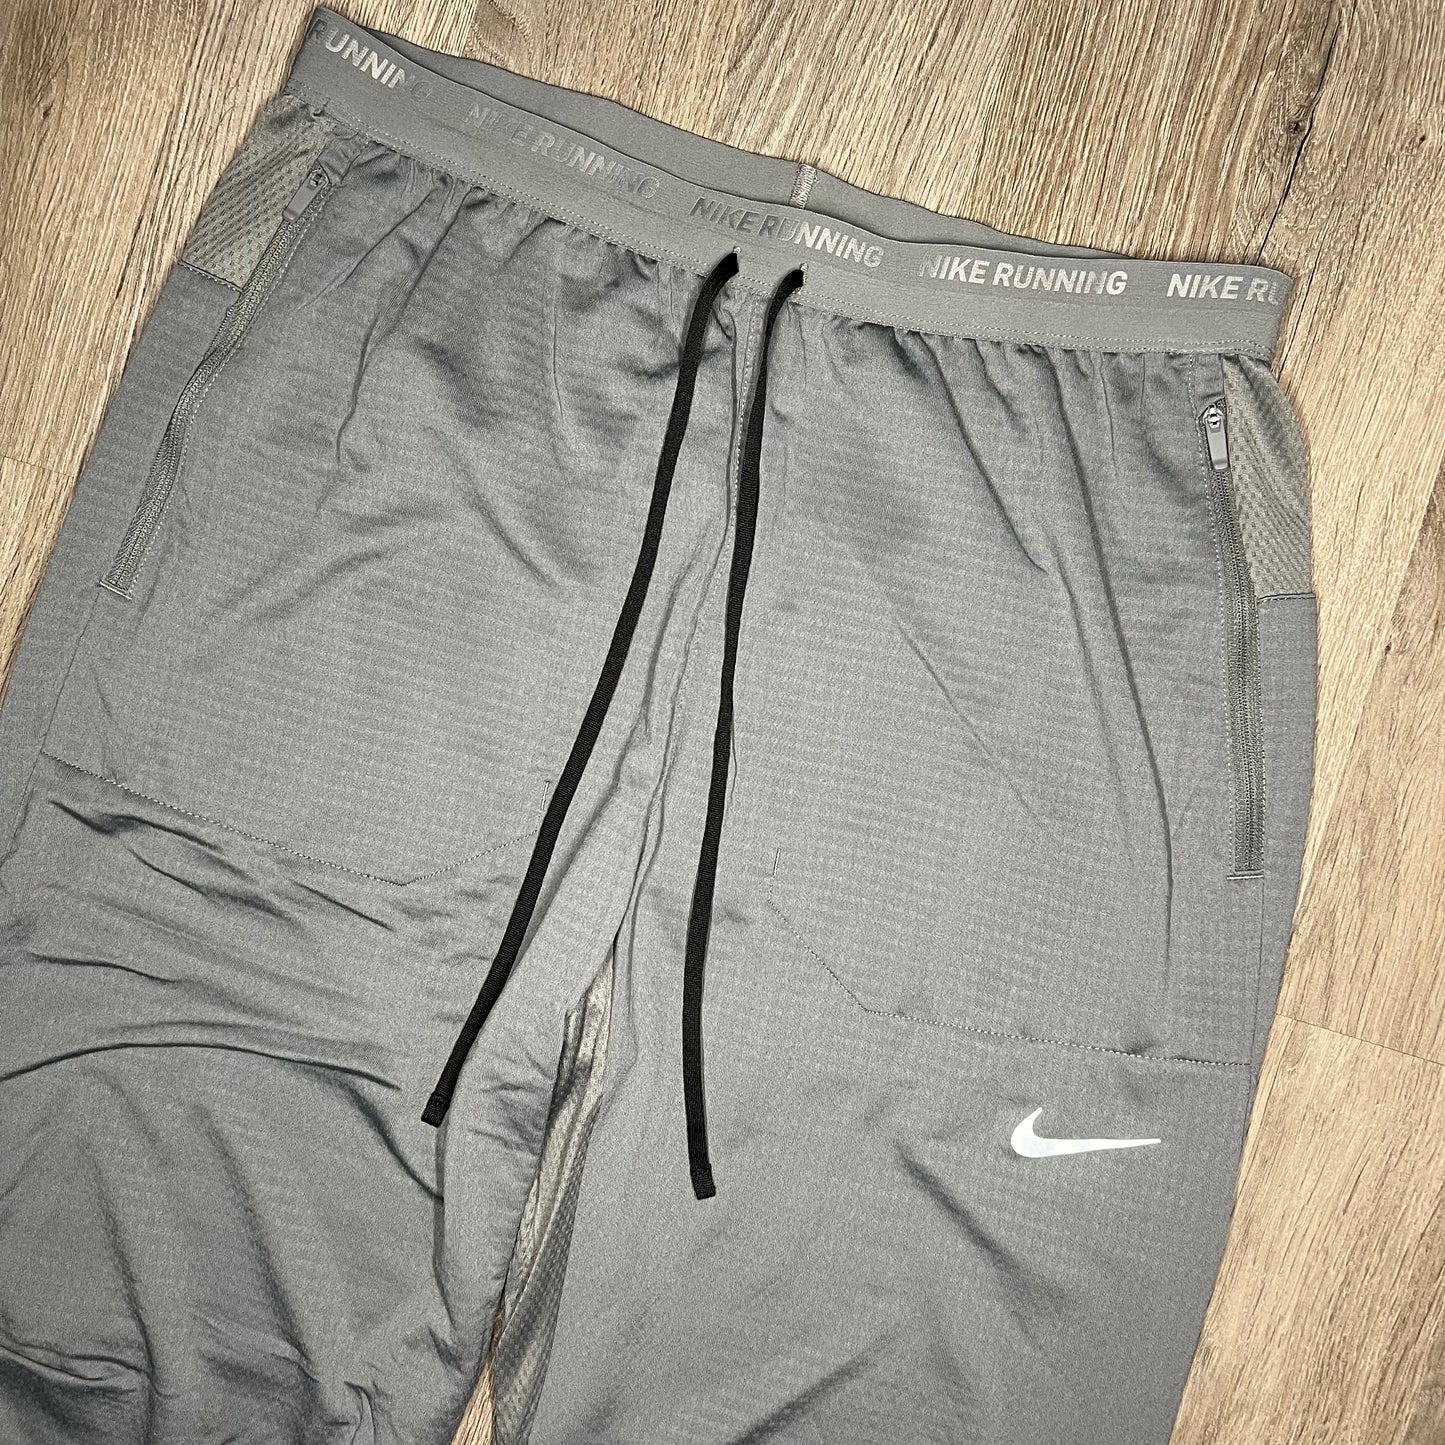 Nike Men's Phenom Elite Running Tights (Smoke Grey, Small) 